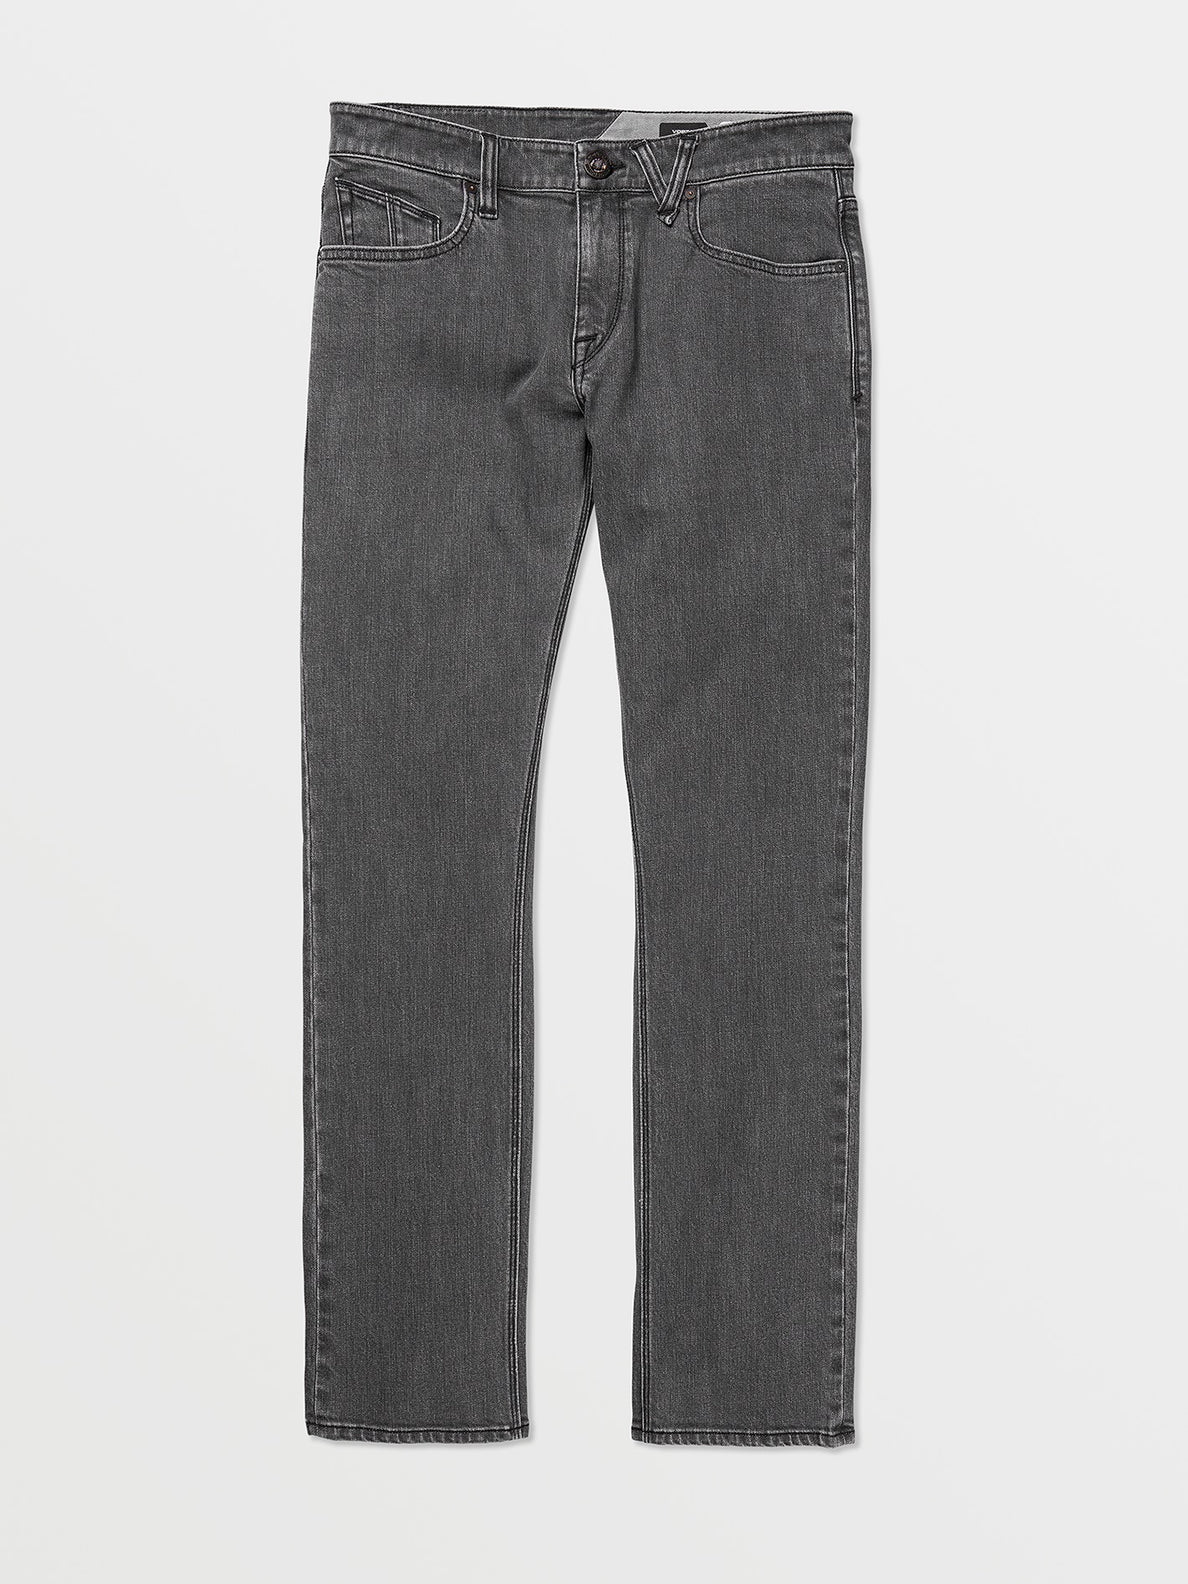 Denim Comfort Fit Mens Joggers Jeans, Waist Size: 28 at Rs 330